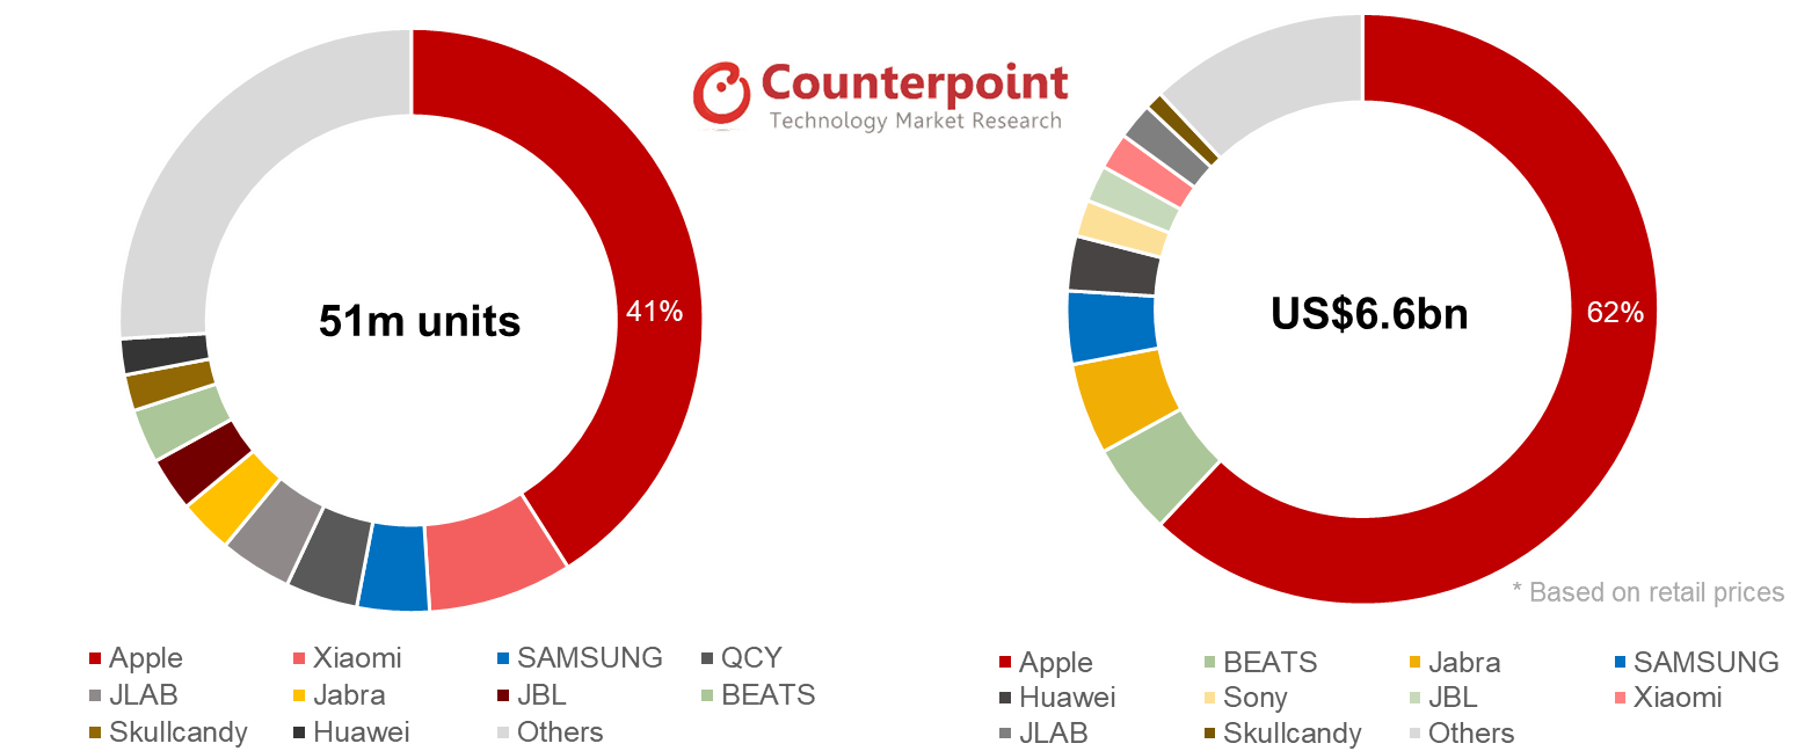 Counterpoint真无线耳机市场份额按品牌-第4季度